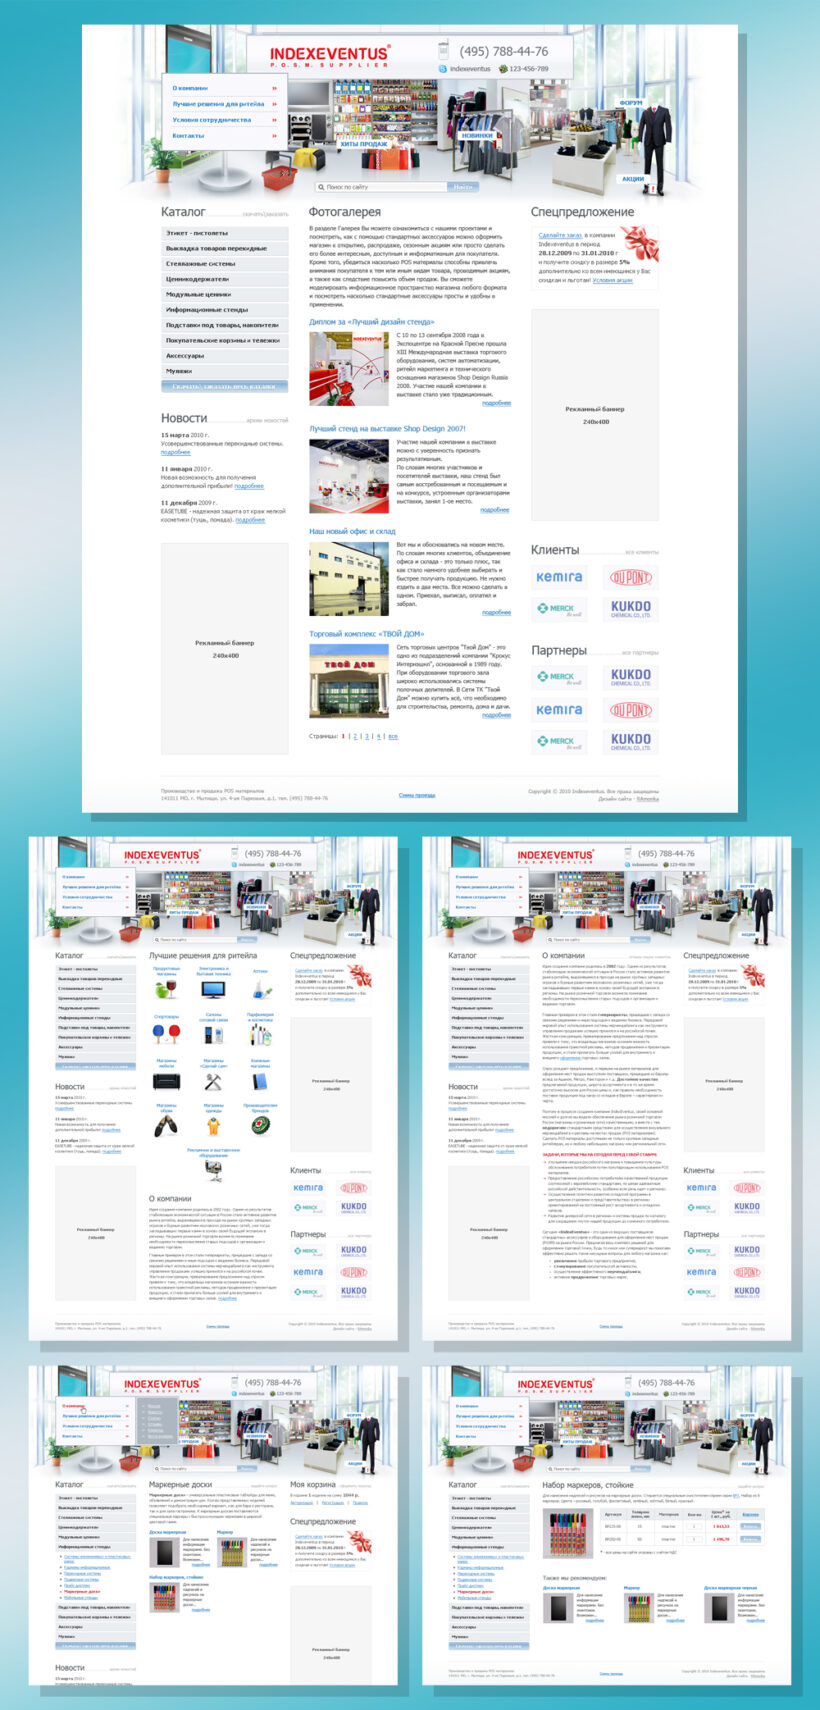 Web Design of Online Store IndexEventus